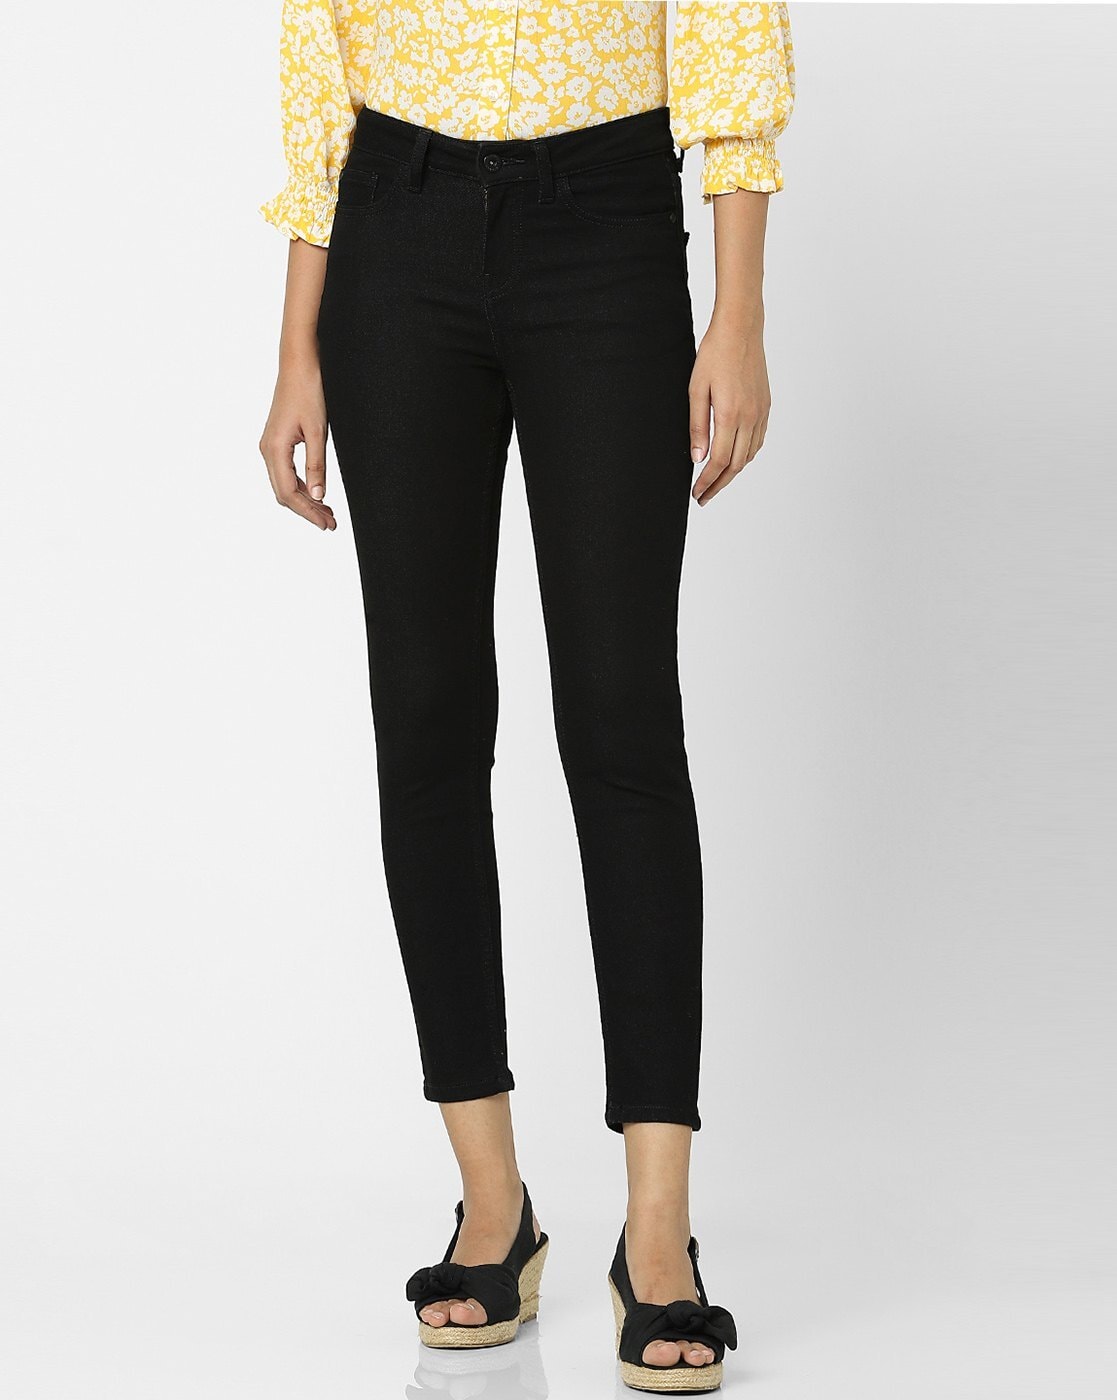 Buy Black Jeans & Jeggings for Women by Vero Moda Online